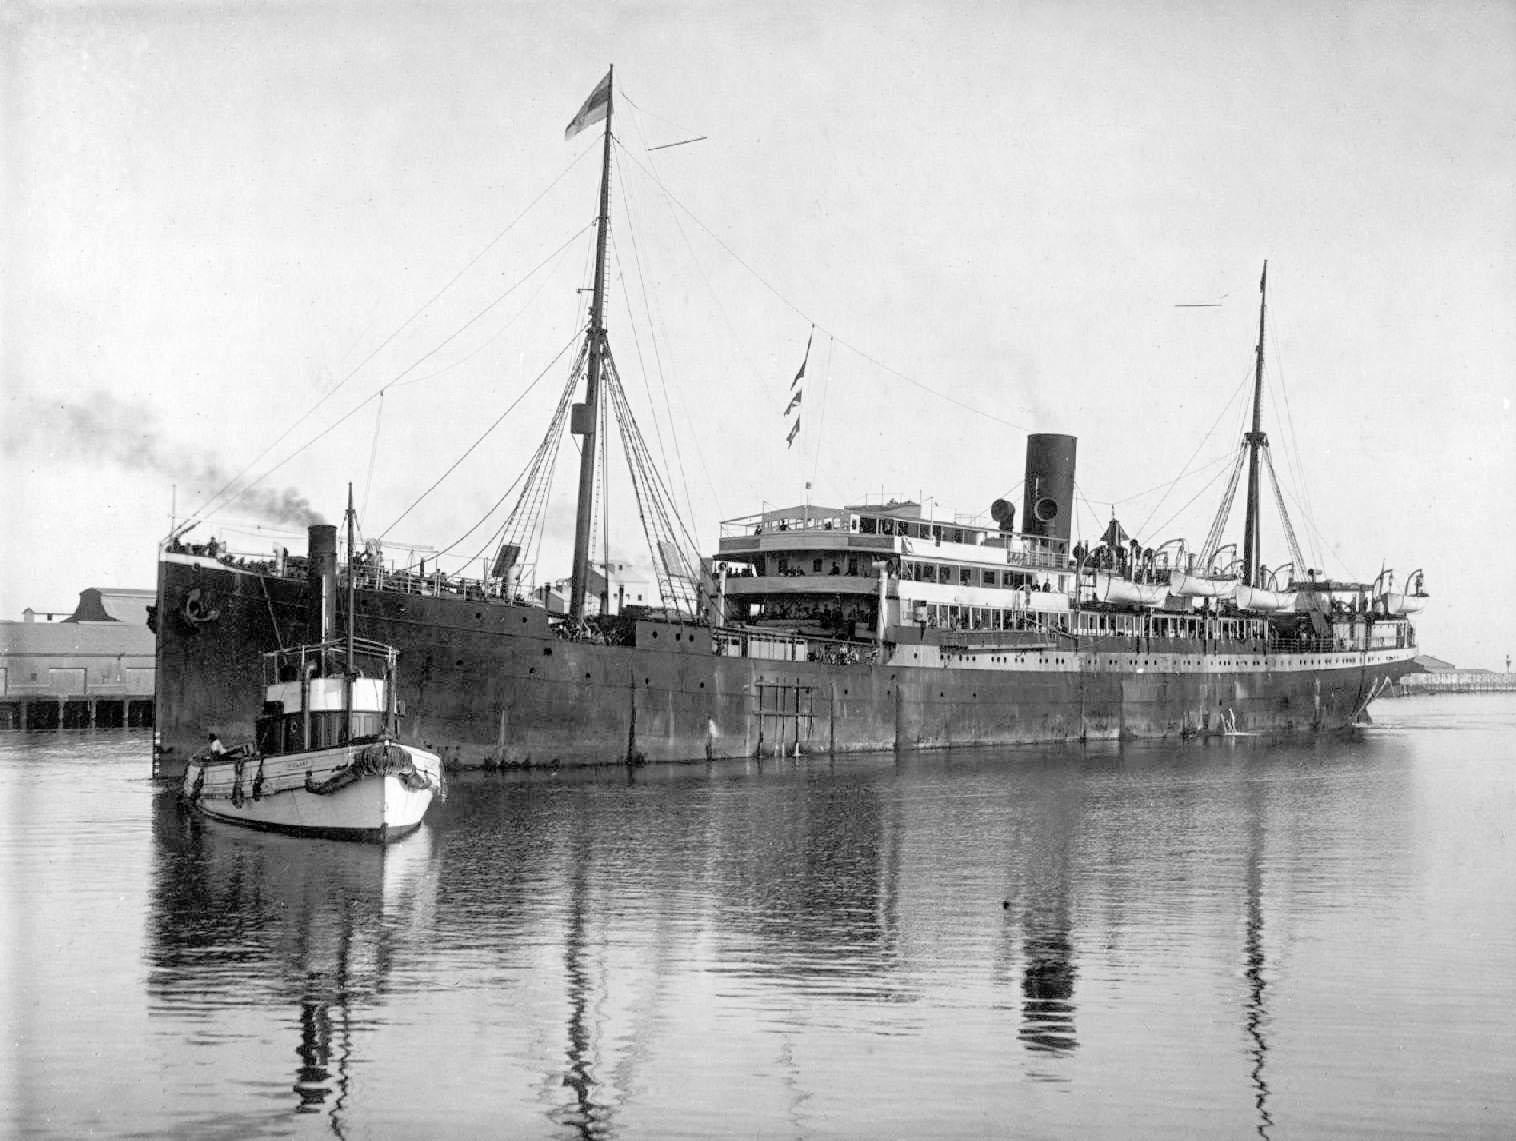 Passenger vessel "Cap Verde", built in 1900 at Flensburg by Flensburg Shipbuilding Co for Hamburg South America Steamship Co.
Tonnage:  5909 gross
Dimensions:  length 410', breadth 48', draught 29'
Port Of Registry:  Hamburg